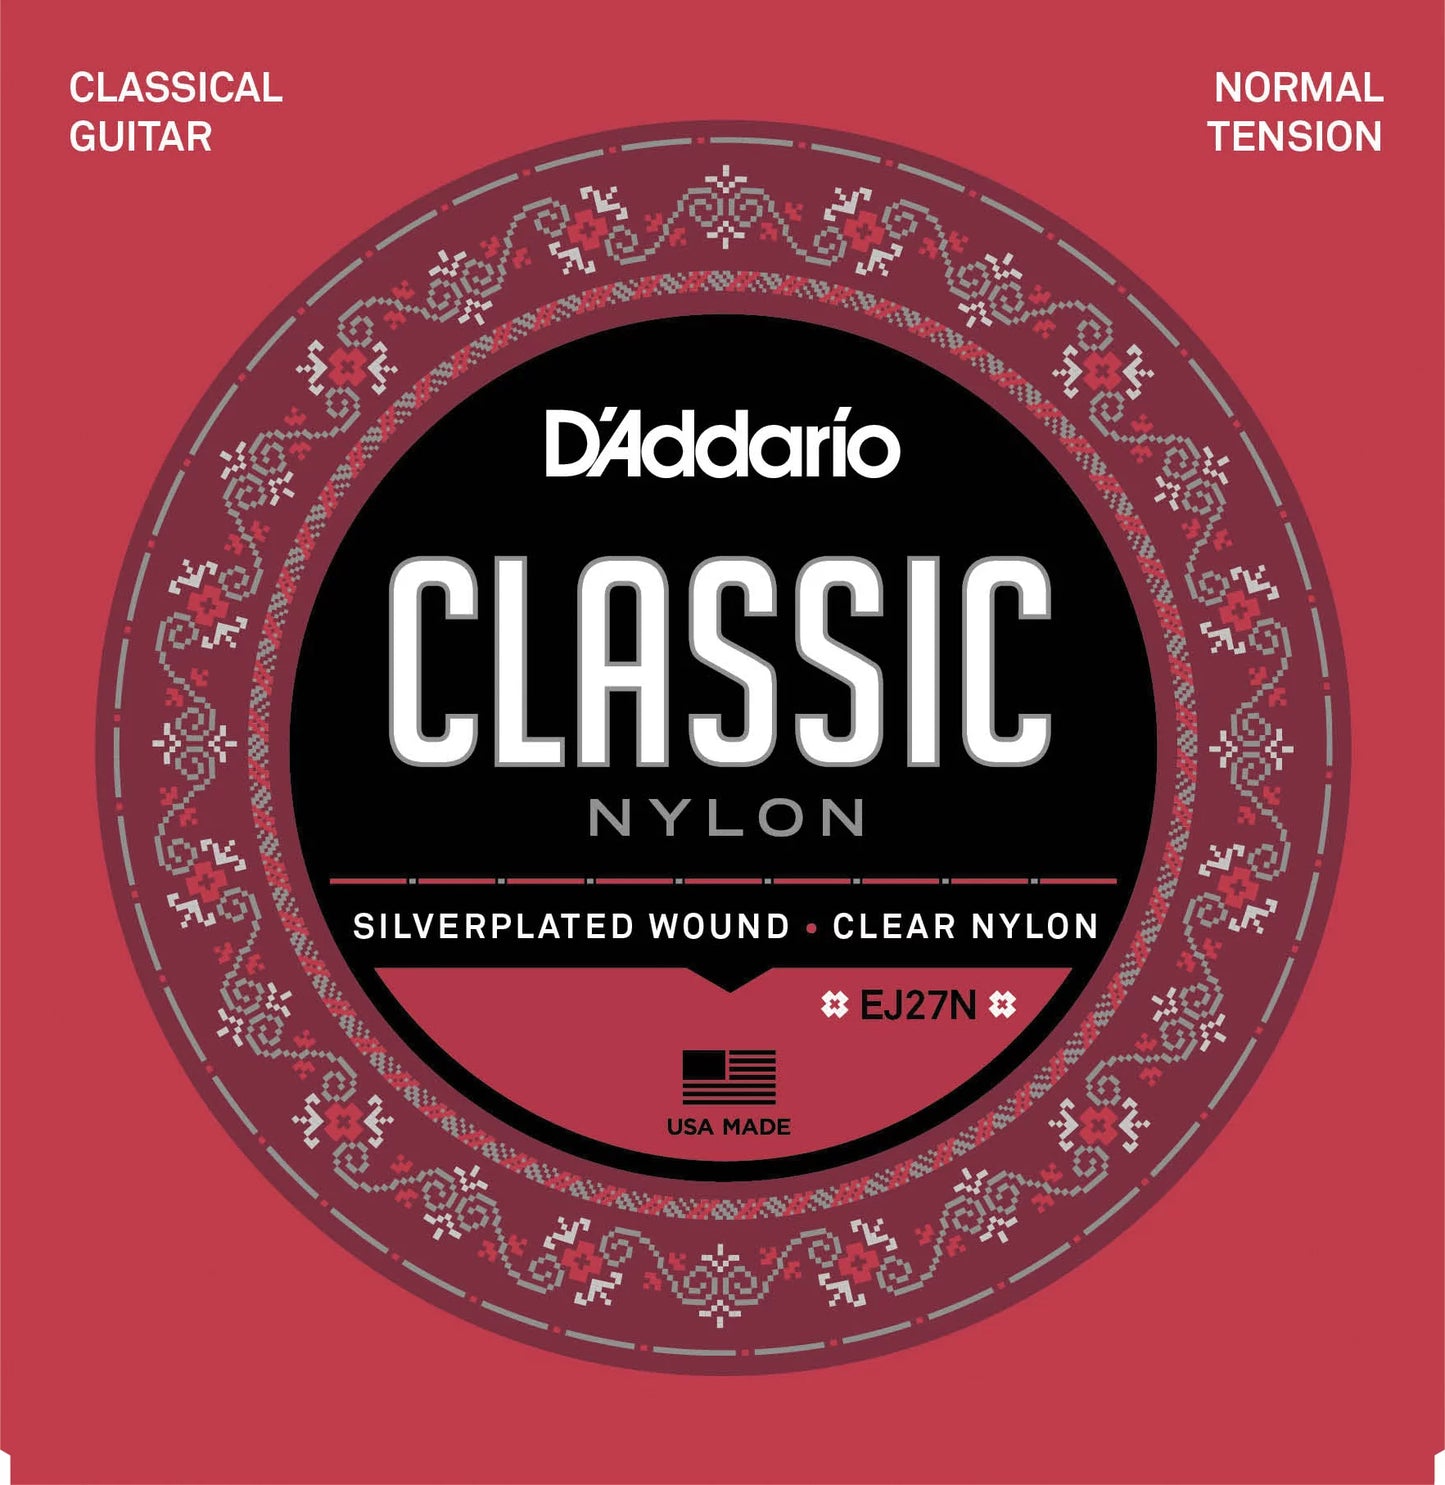 D'Addario EJ27N Normal Tension, Classic Nylon Student Classical Guitar Strings